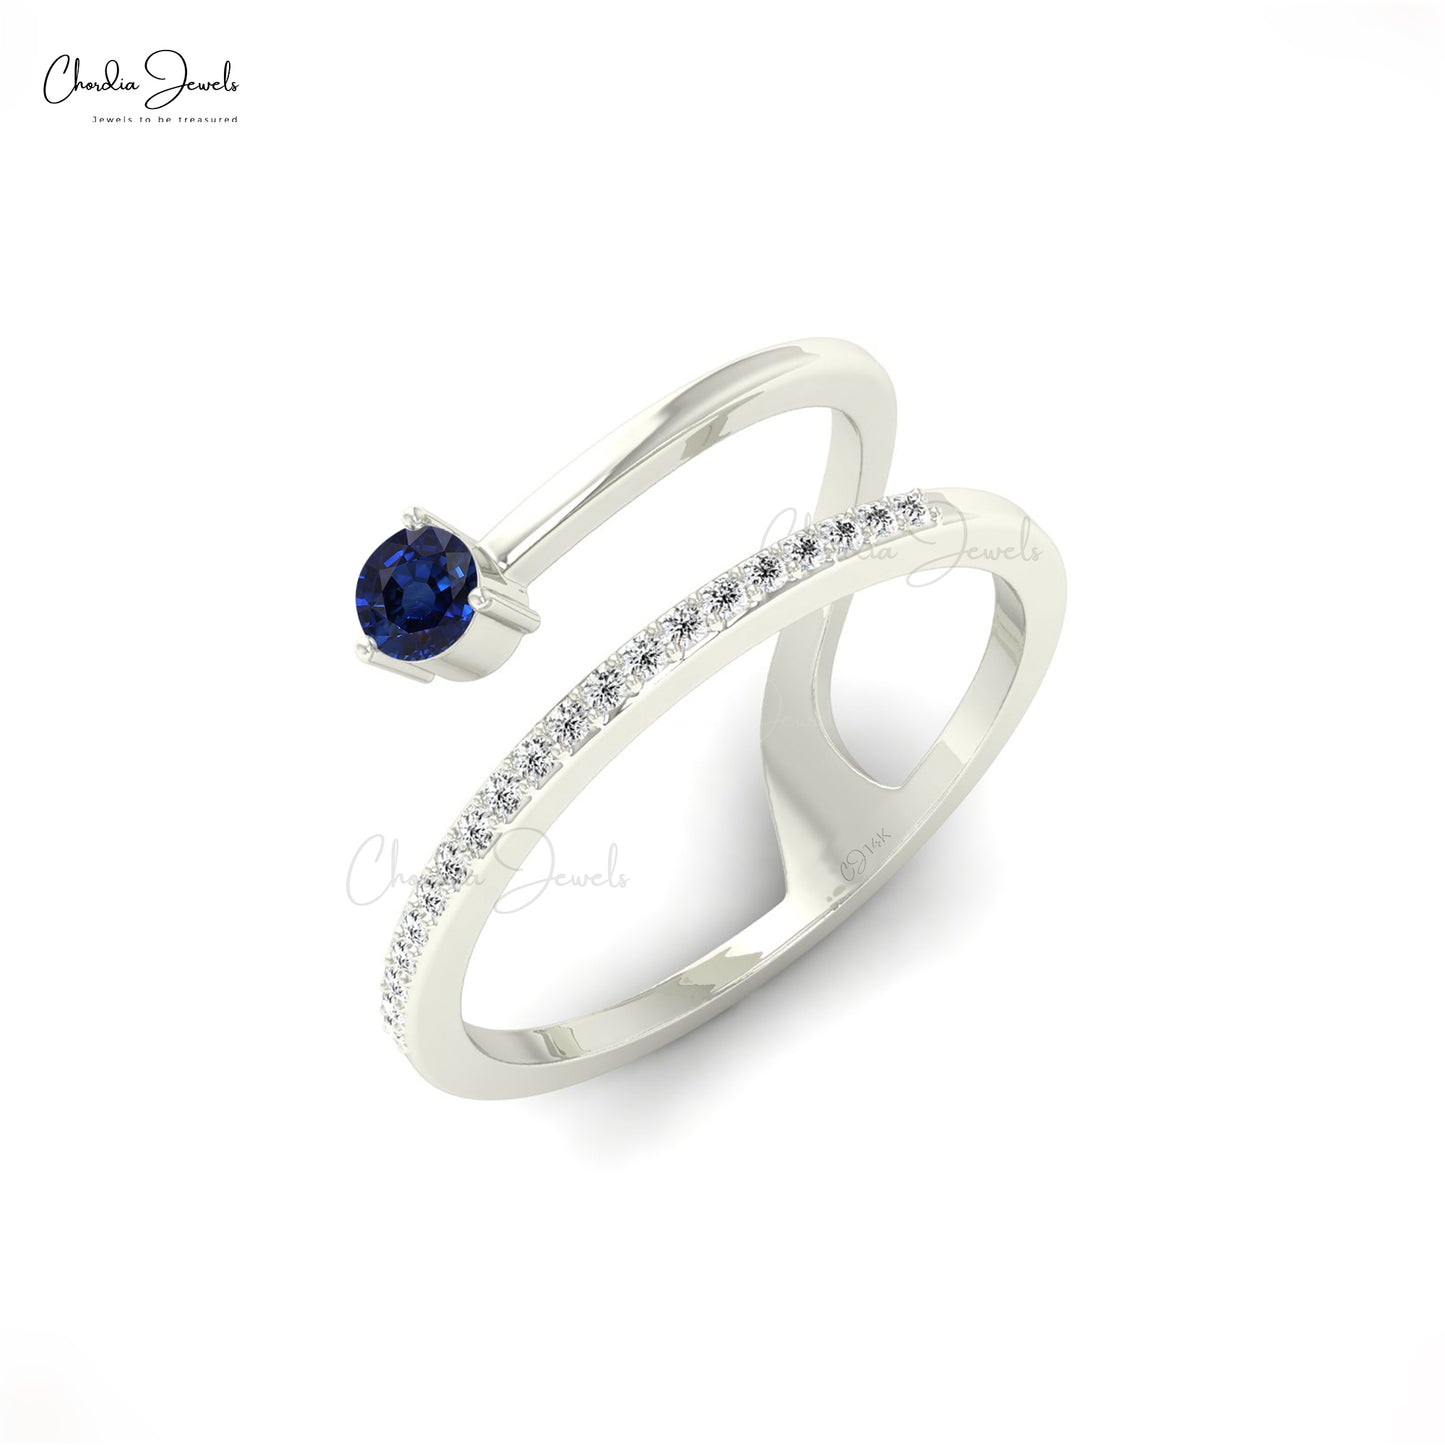 Buy 3mm Blue Sapphire Dainty Ring